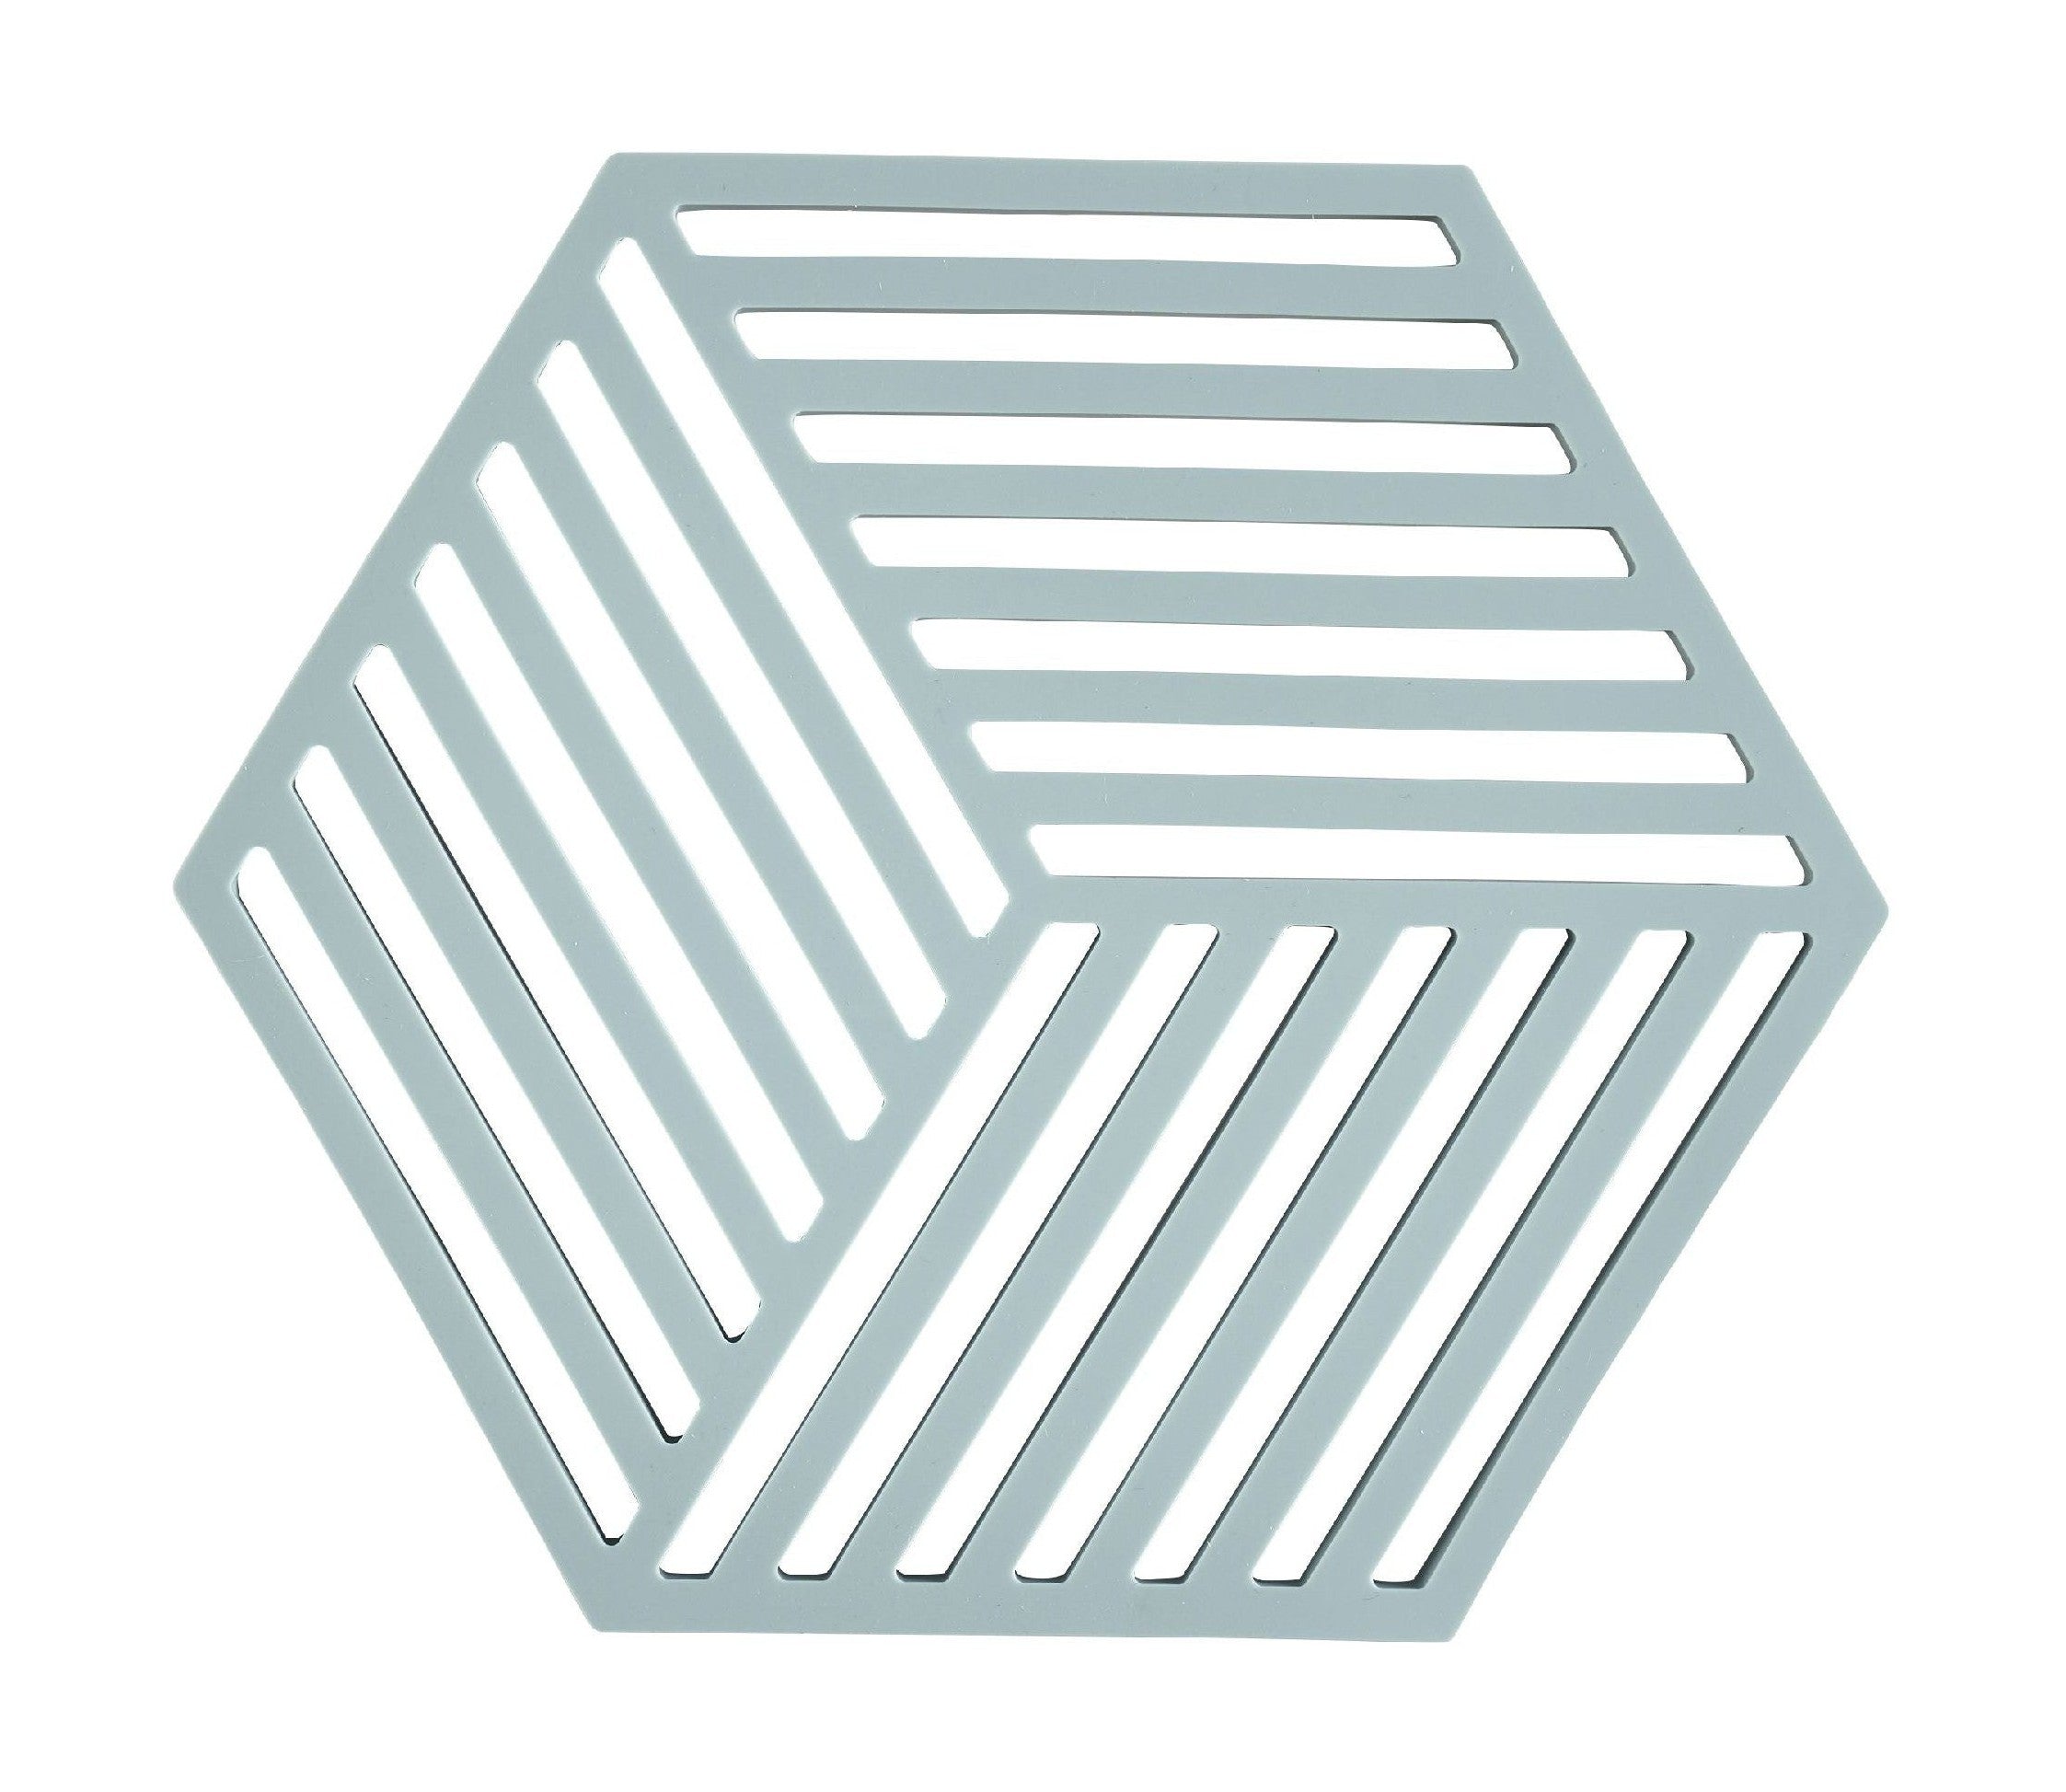 Zona Dinamarca Hexagon Trivet 16 x 14 x 0,9 cm, niebla azul